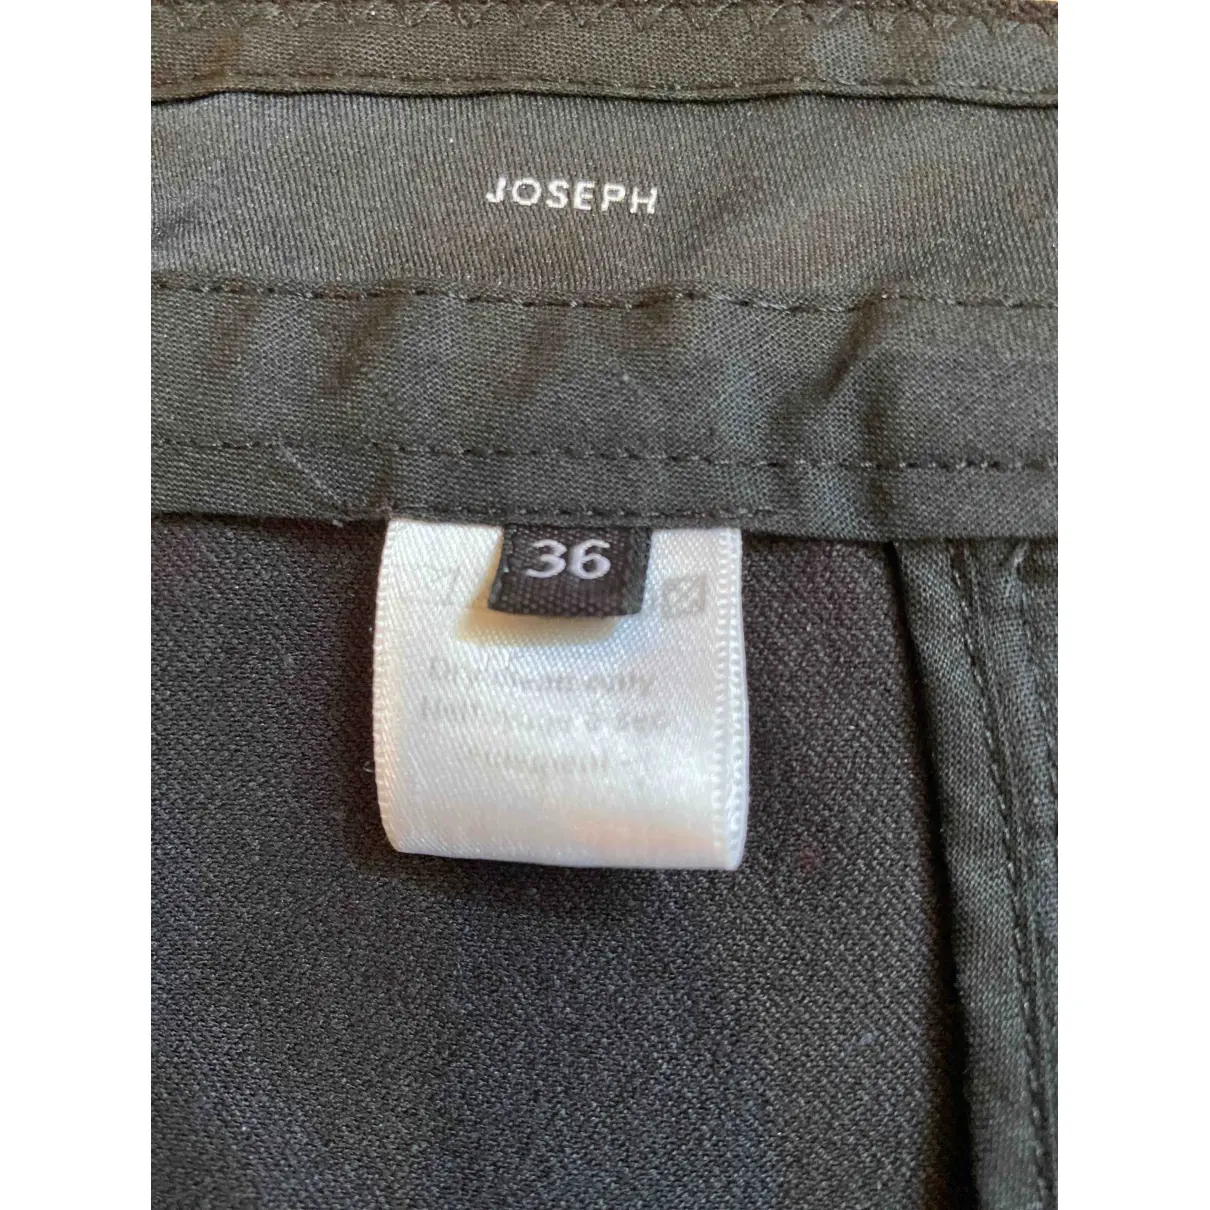 Buy Joseph Slim pants online